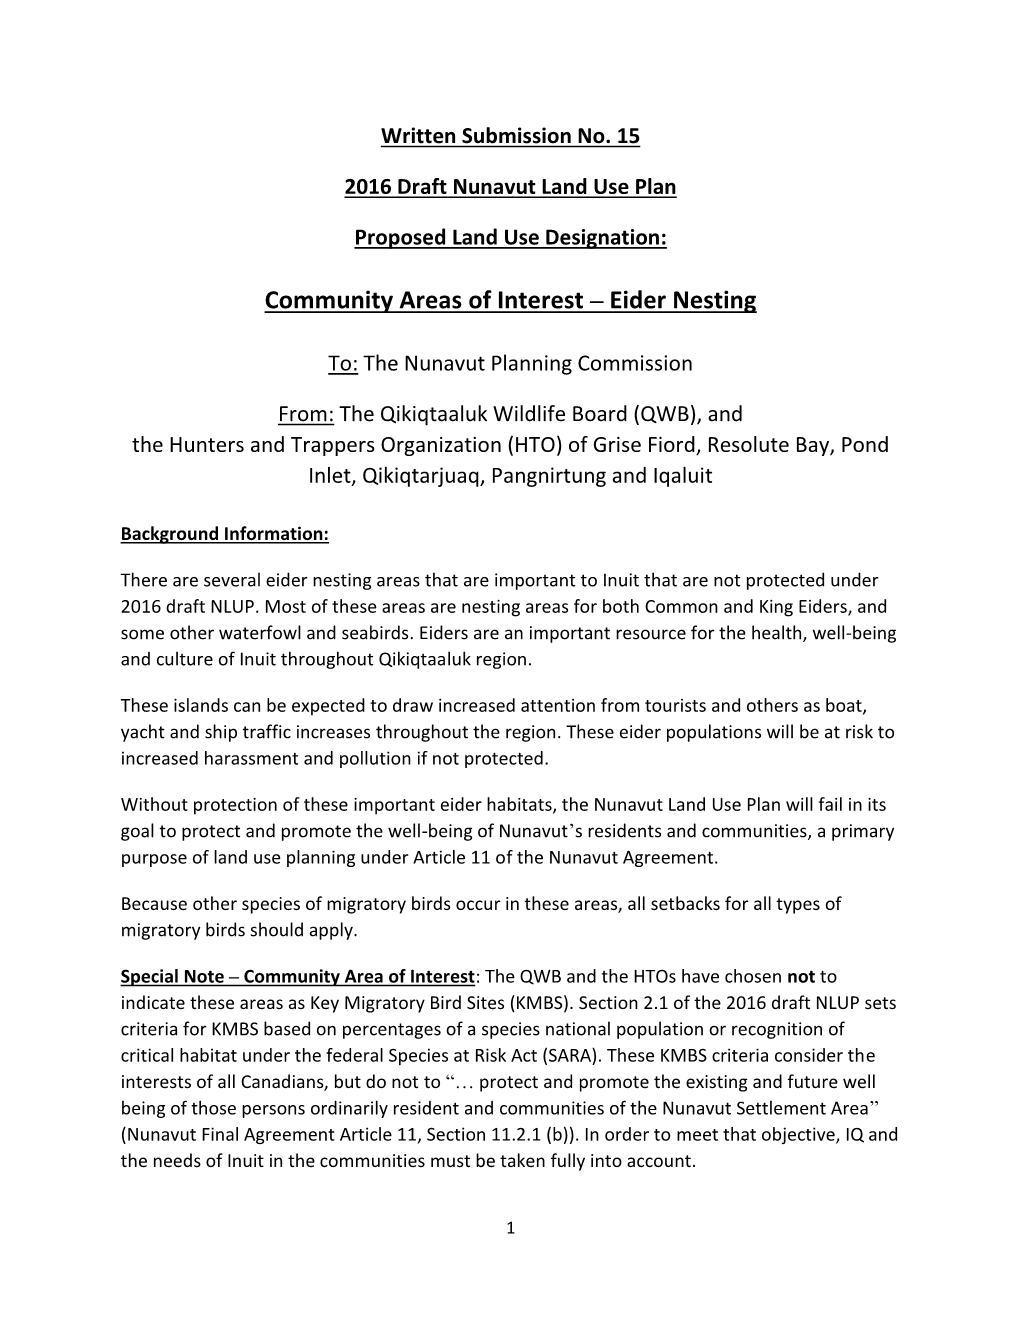 Community Areas of Interest – Eider Nesting